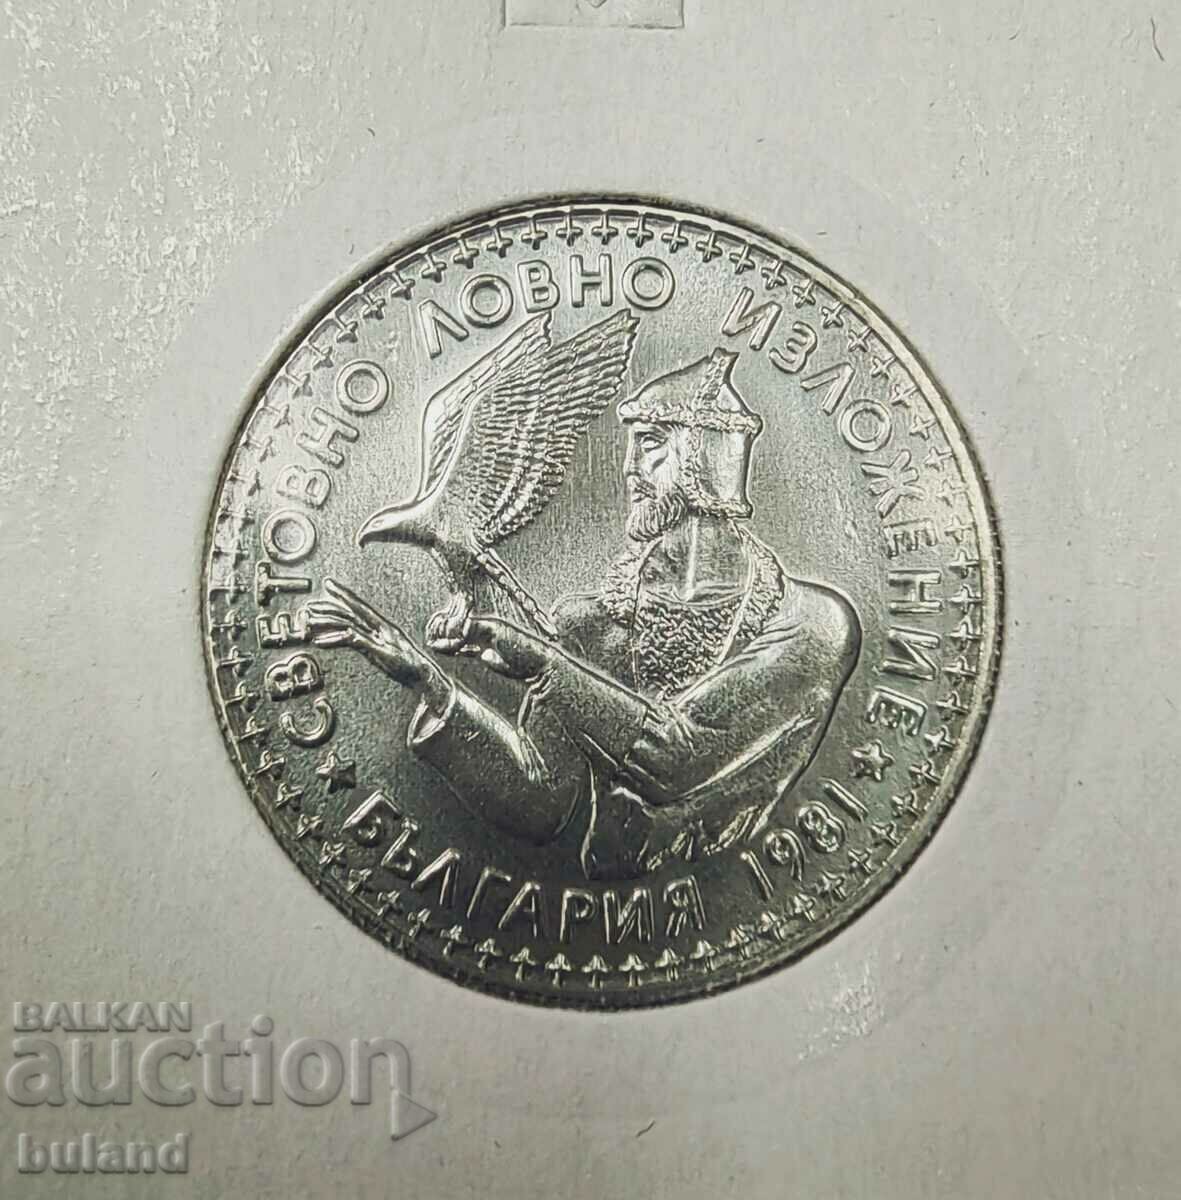 NRB Bulgarian Jubilee Coin 2 Leva 1981 Hunting Exhibition